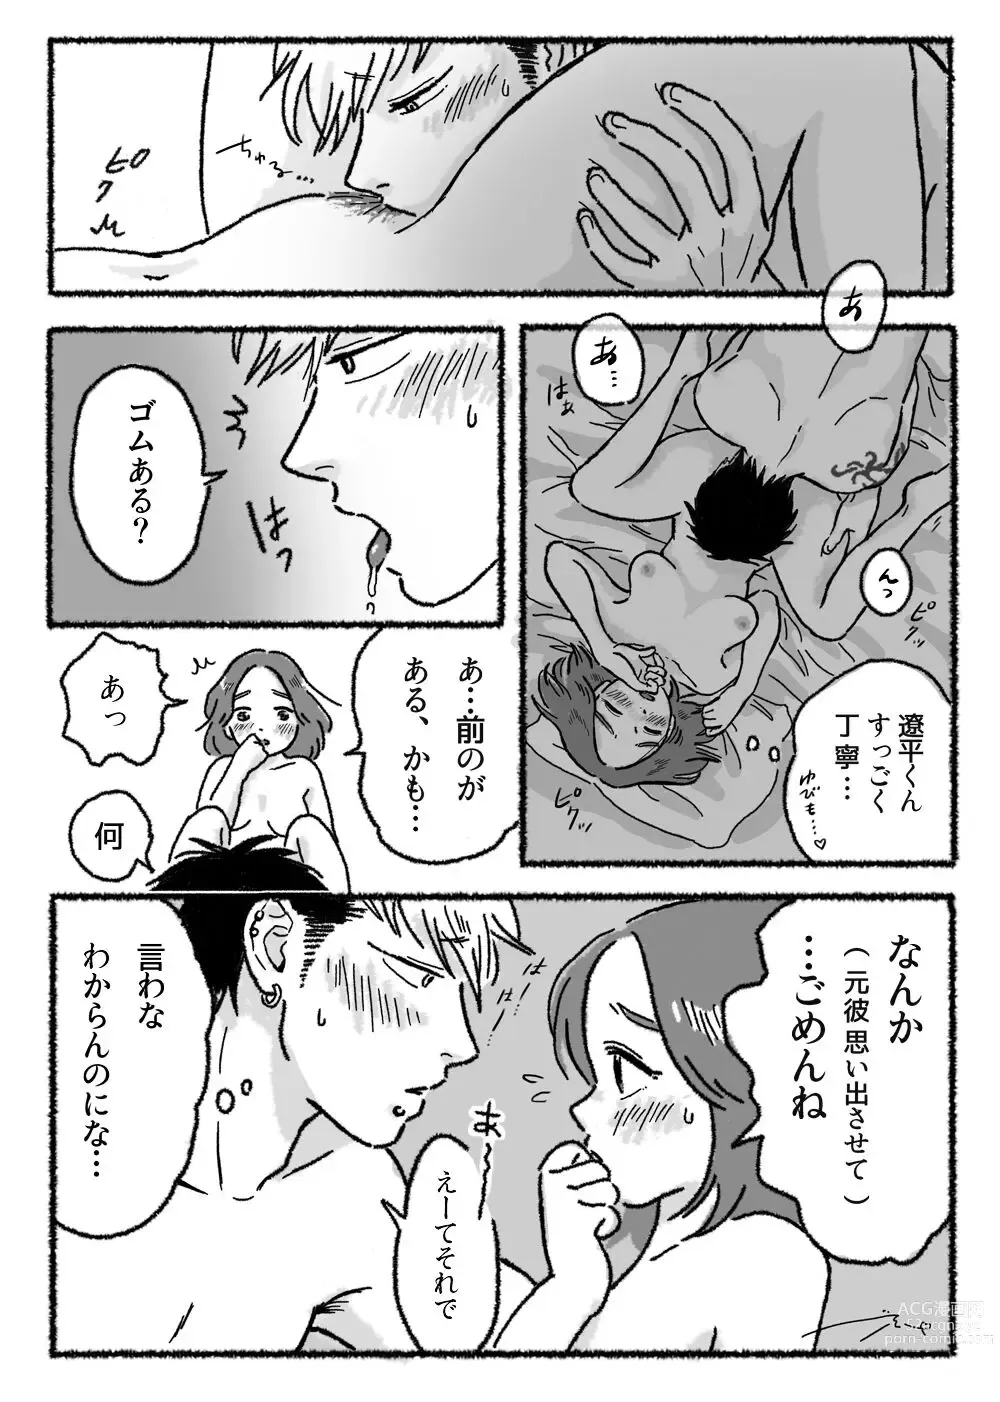 Page 1 of doujinshi Ryoutomo